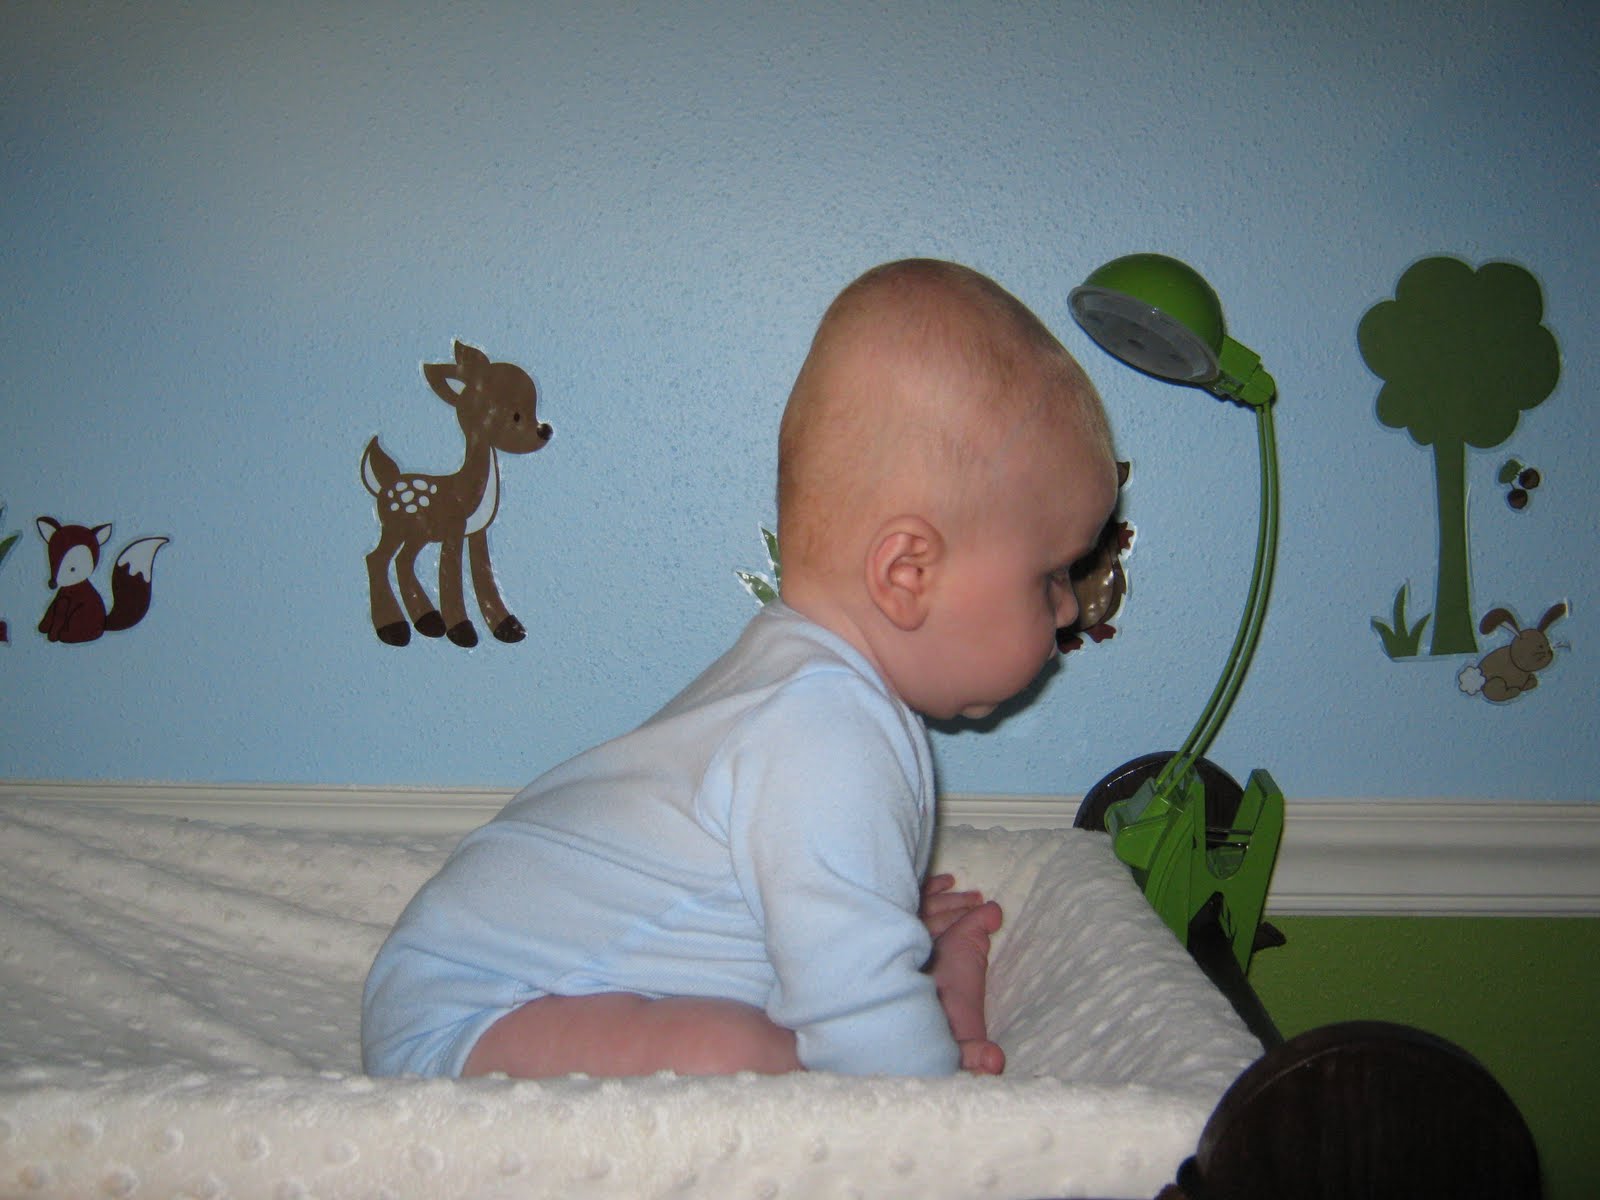 На затылке месяц. Долихоцефалическая, долихоцефалическая форма головы. Долихоцефалическая форма головы у младенца. : Плагиоцефалия, брахицефалия, долихоцефалия. Вытянутый затылок у ребенка.